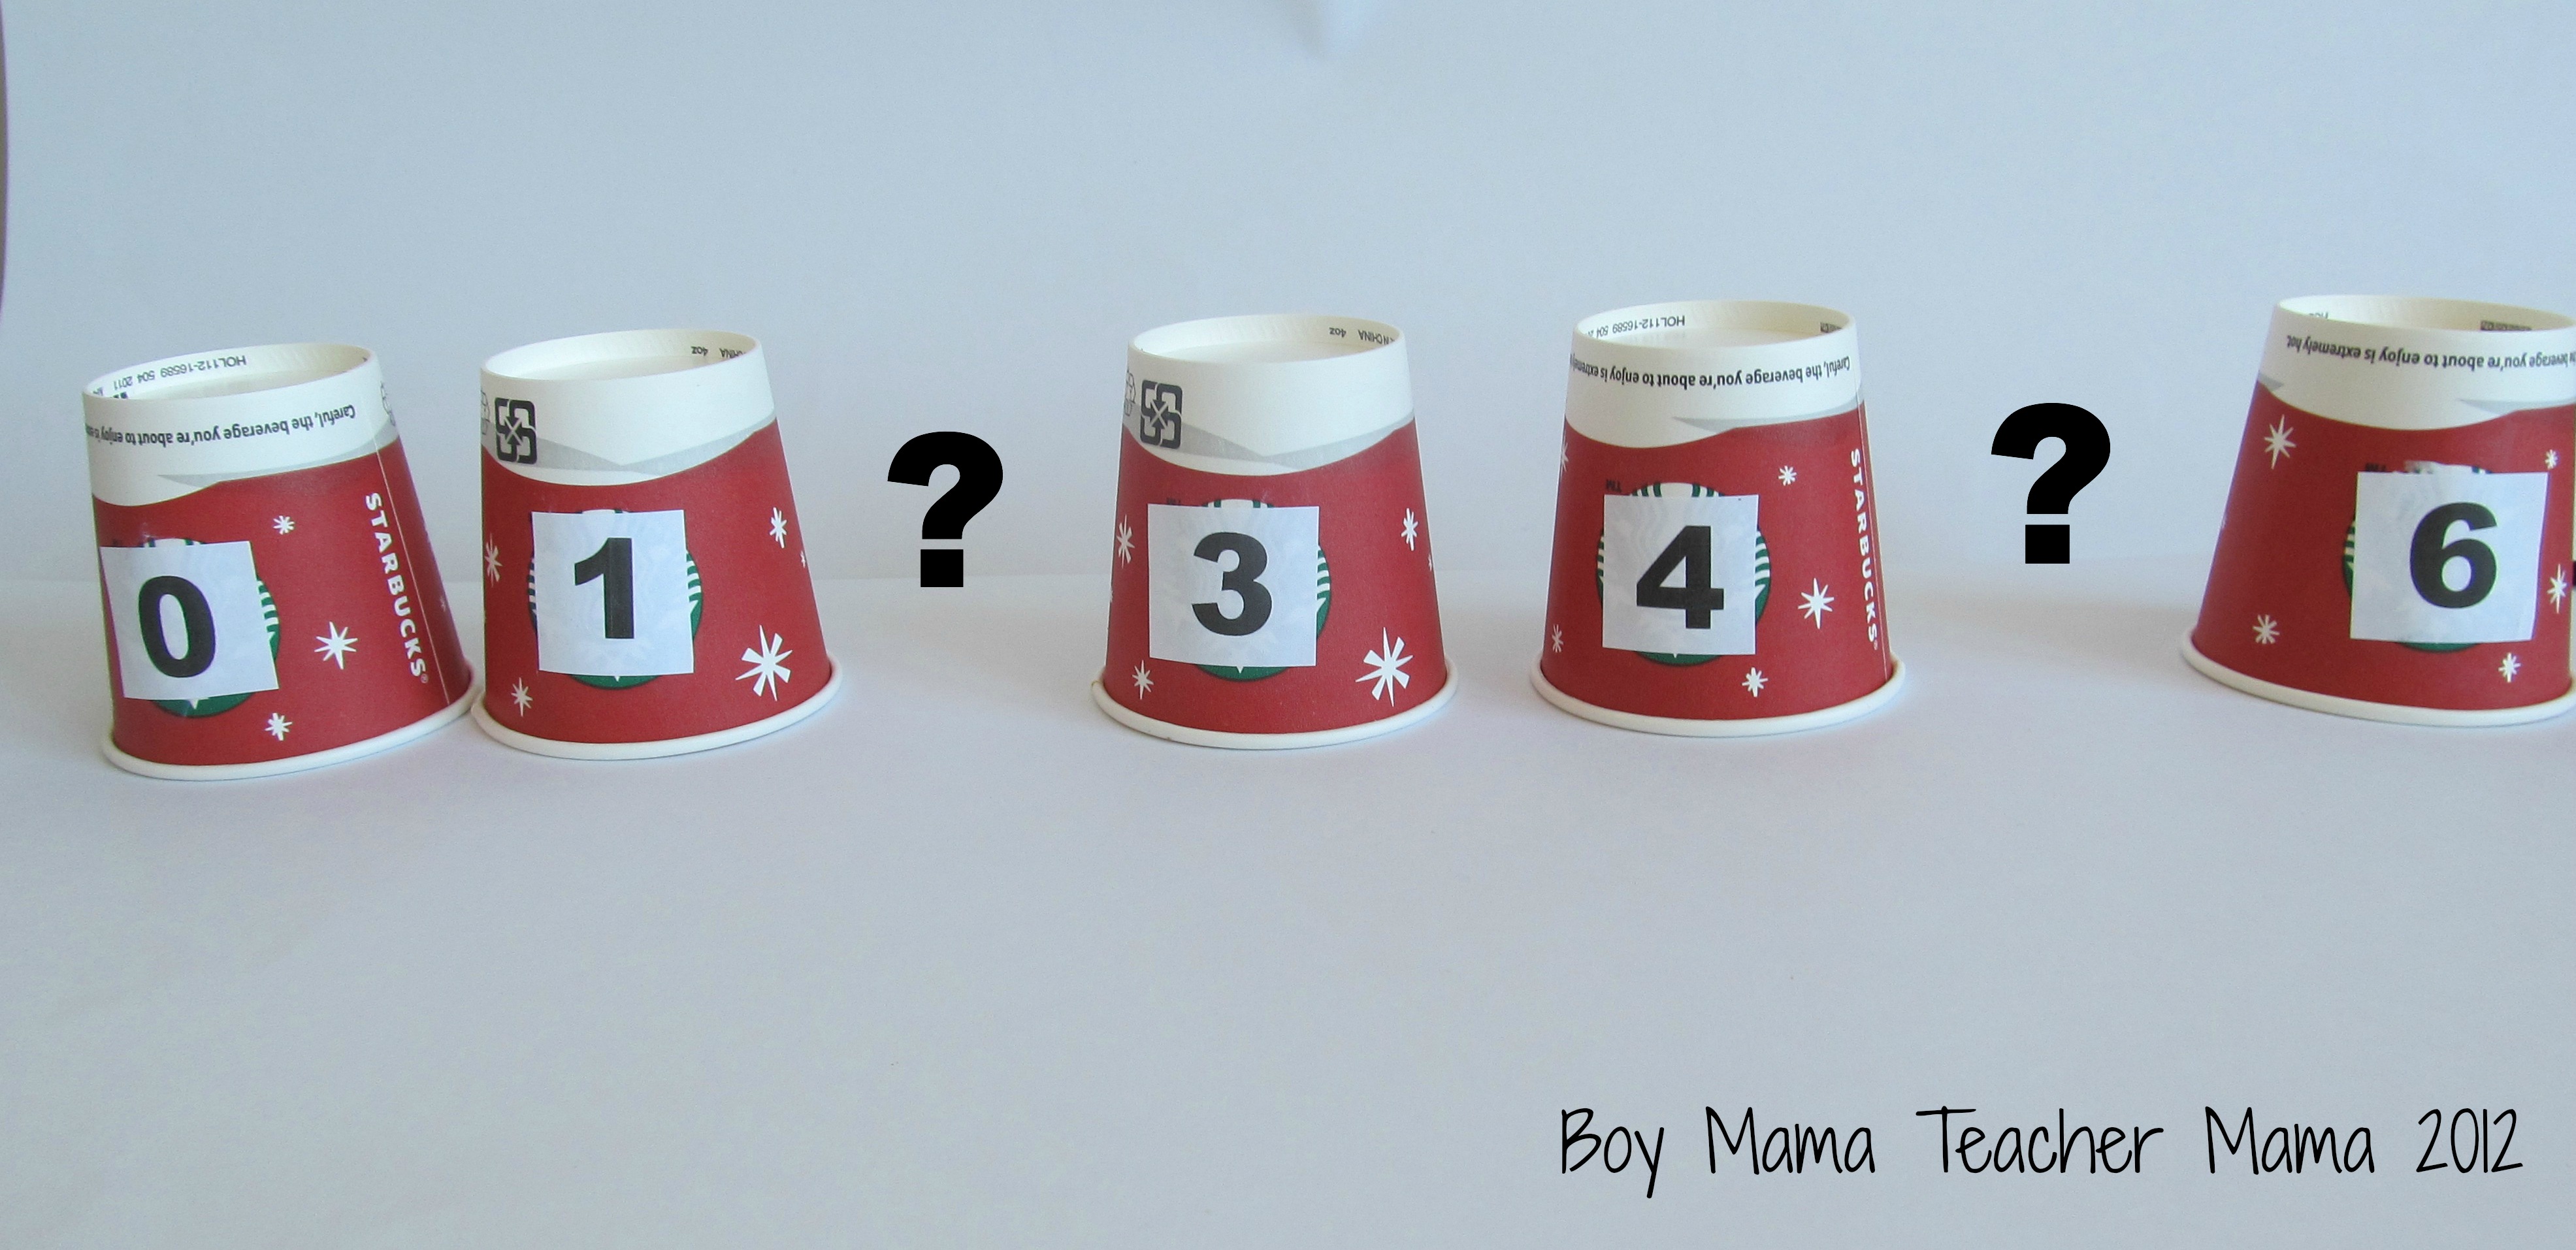 Teacher Mama: Counting Cups - Boy Mama Teacher Mama